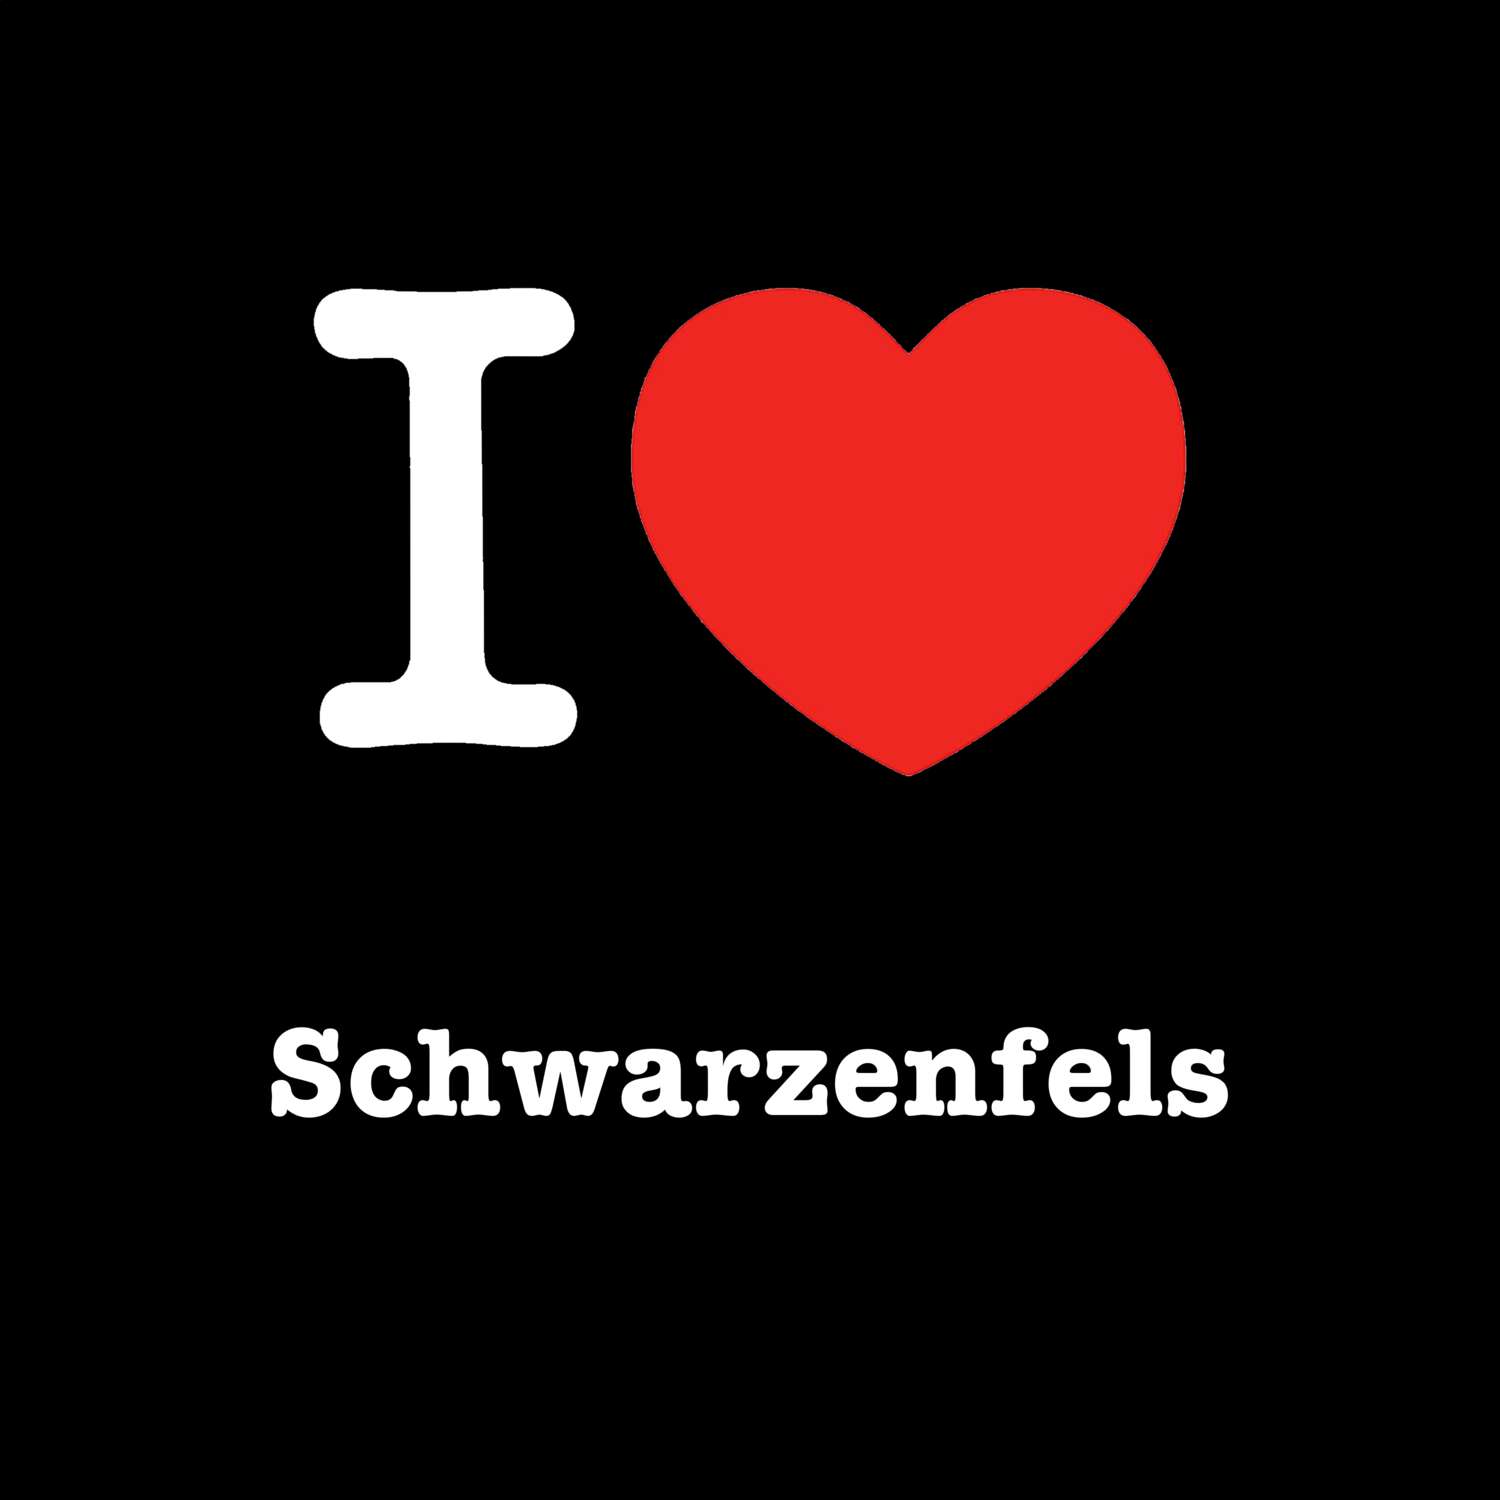 Schwarzenfels T-Shirt »I love«